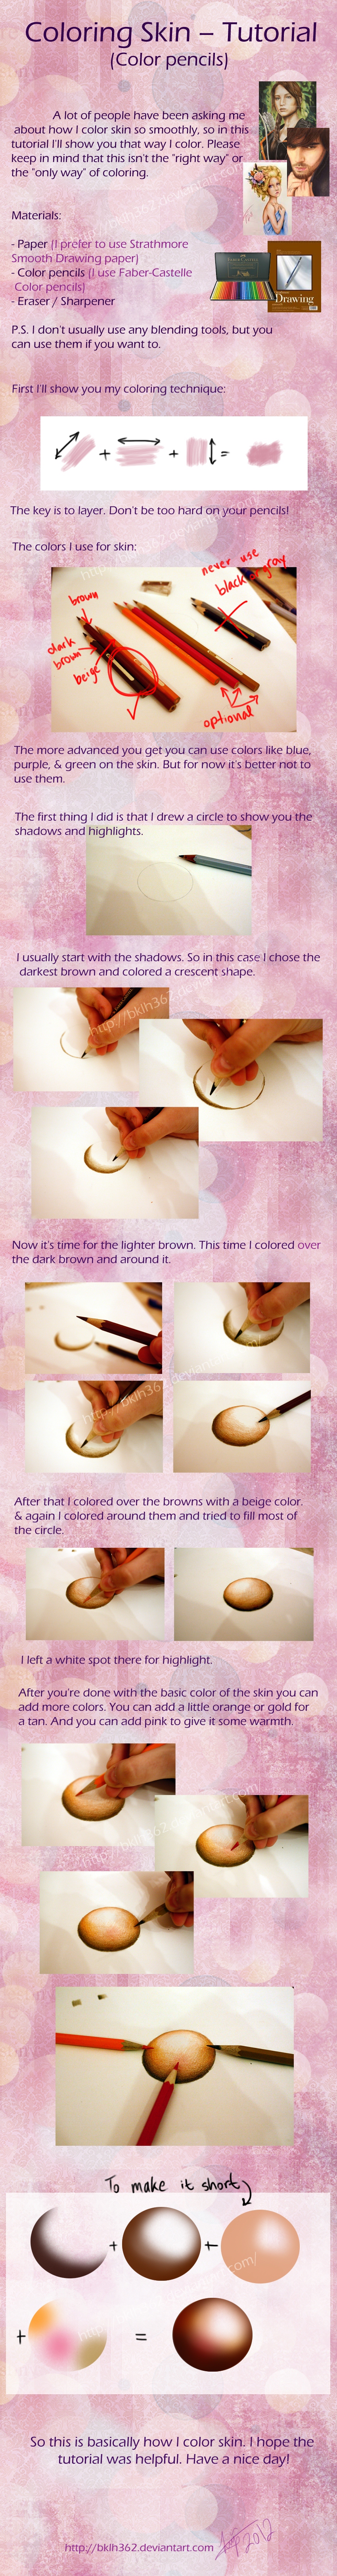 Coloring Skin (Color pencils tutorial) by BKLH362 on DeviantArt